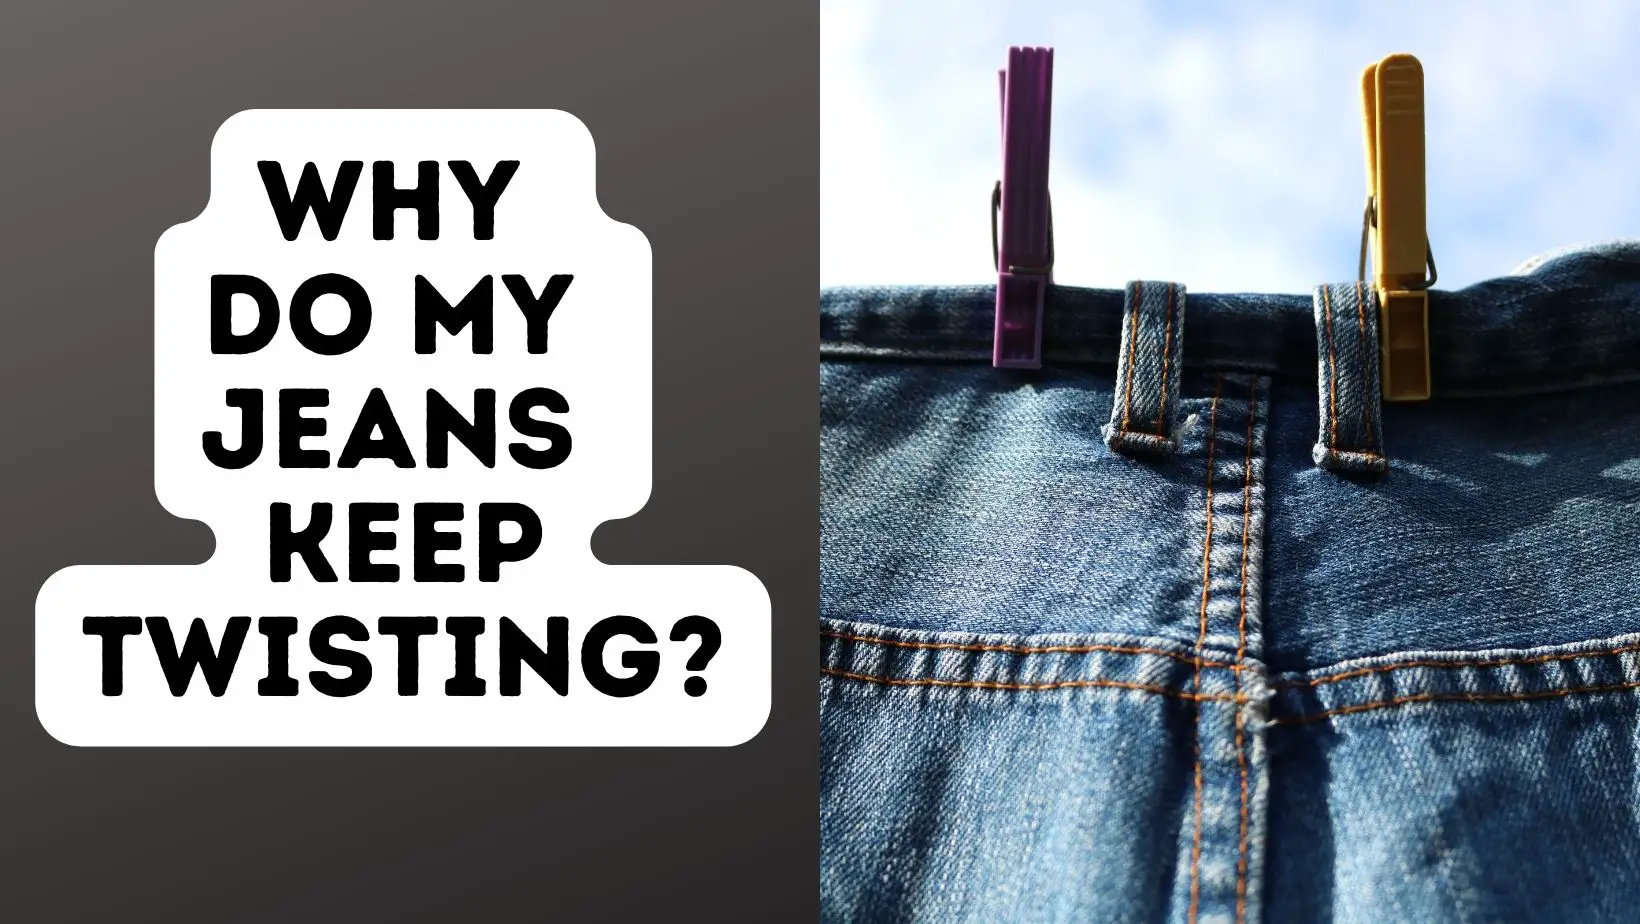 Why Do My Jeans Keep Twisting?